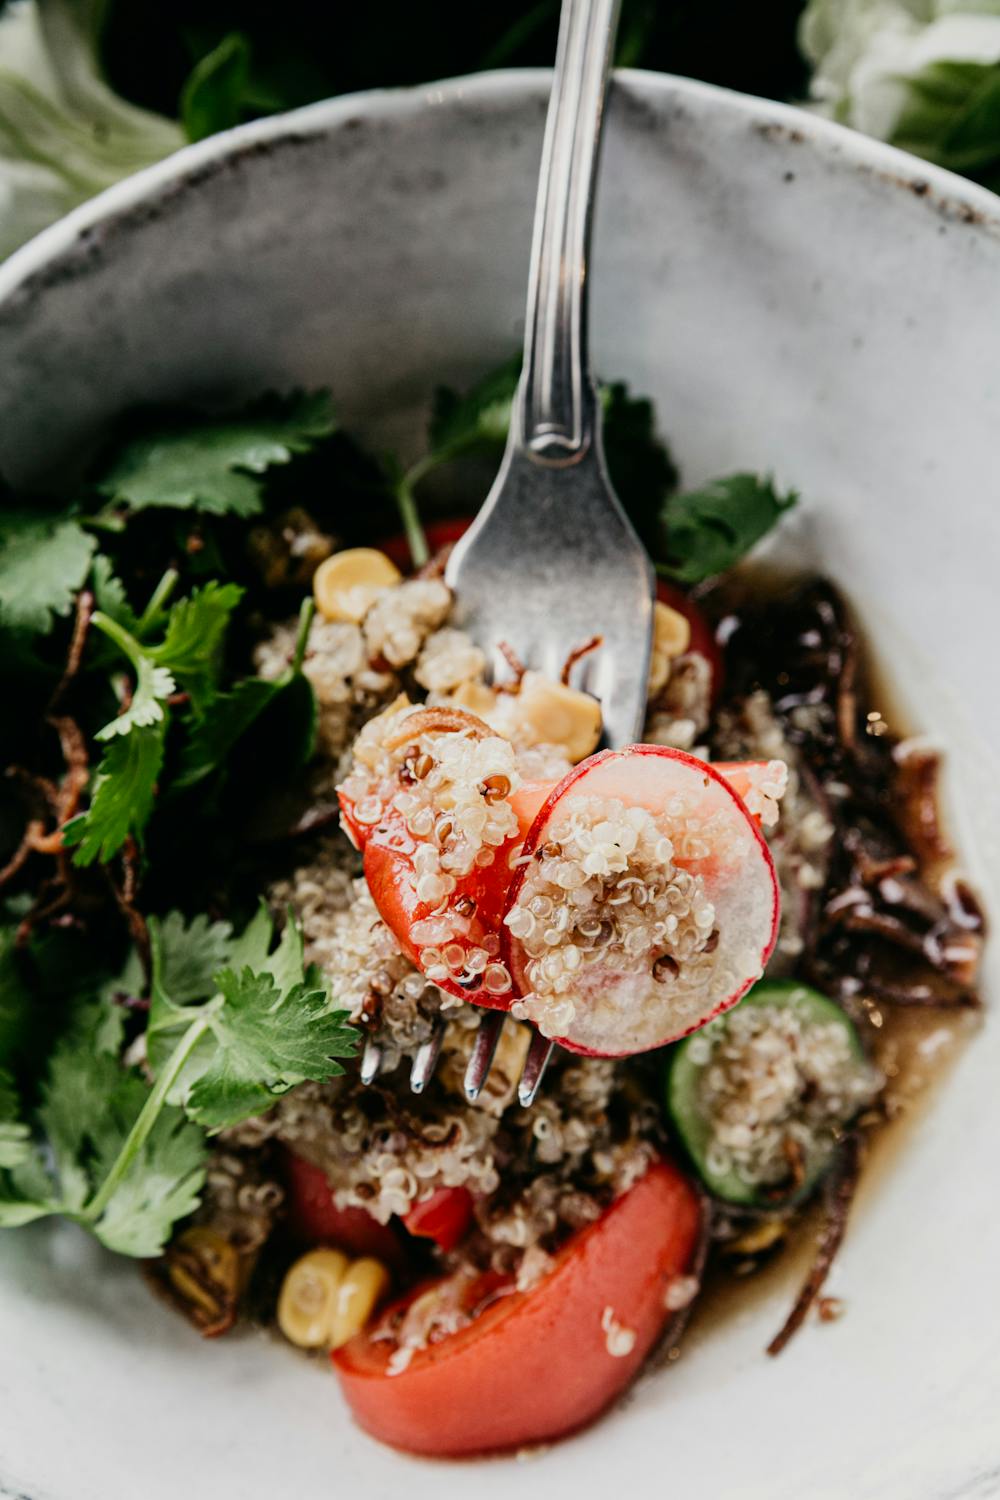 quinoa salad with tomatoe, quinoa, and turnip on a metal fork